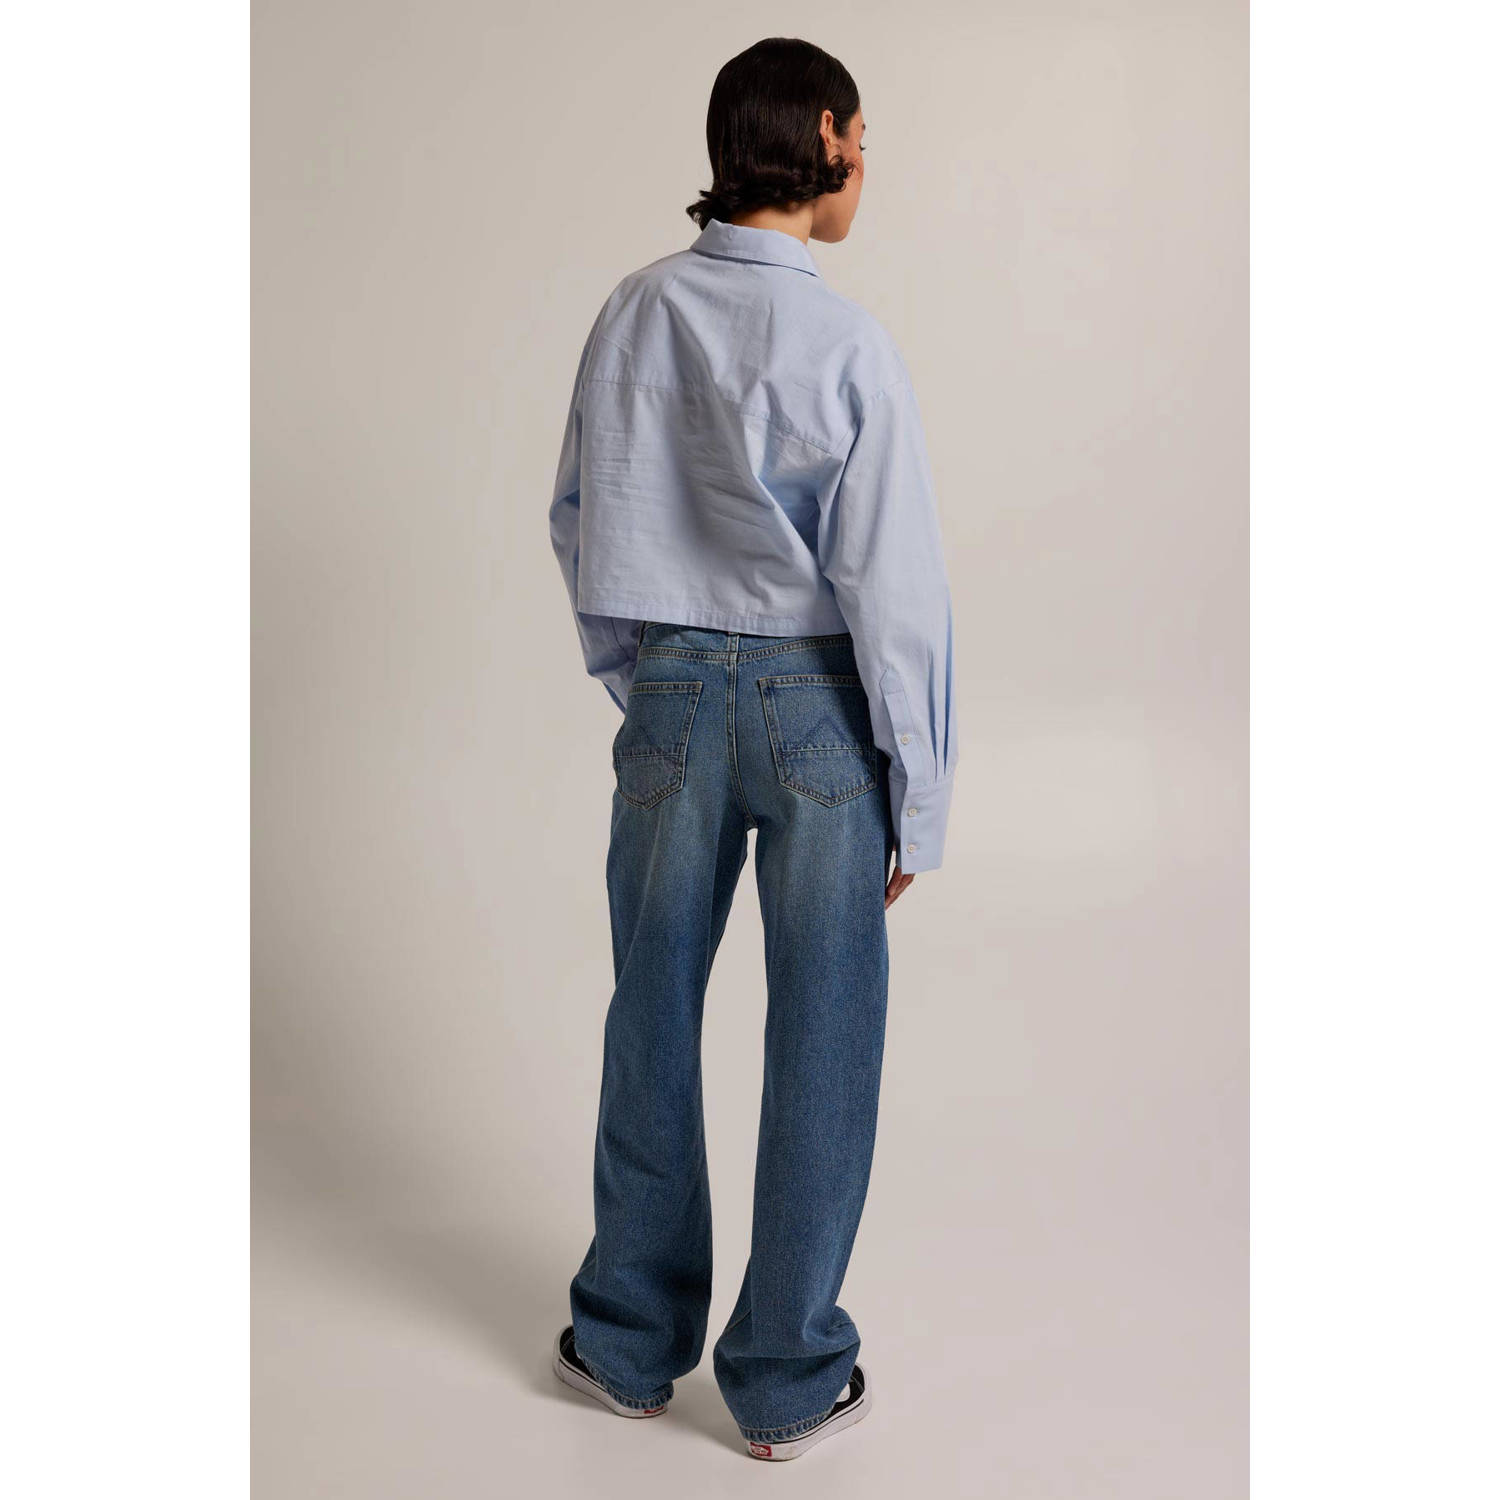 America Today high waist straight jeans Irvine dark blue denim